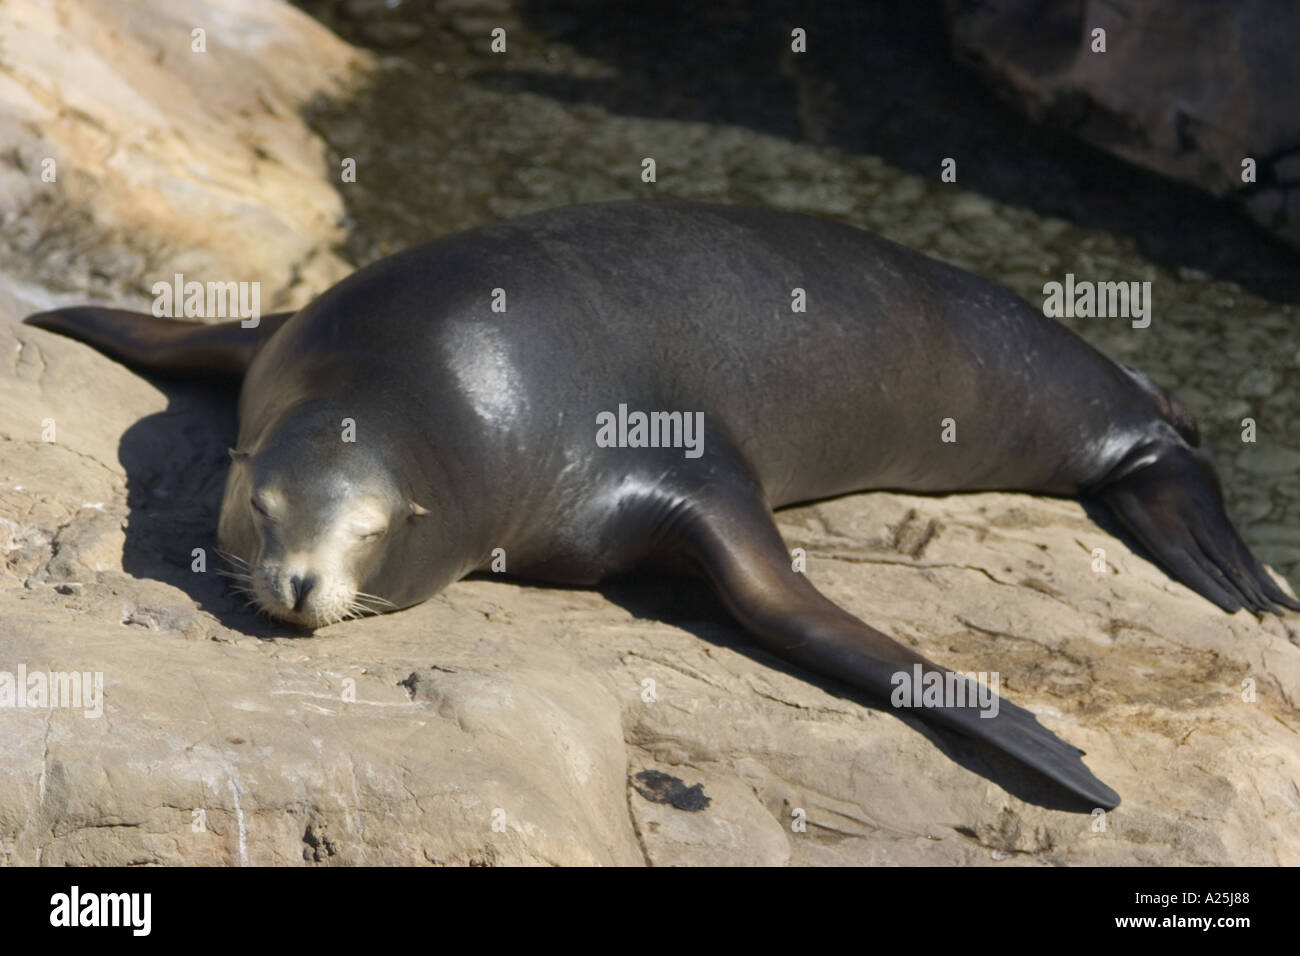 Harbor seal sleeping on rock formation at Sea World Orlando Florida Stock  Photo - Alamy